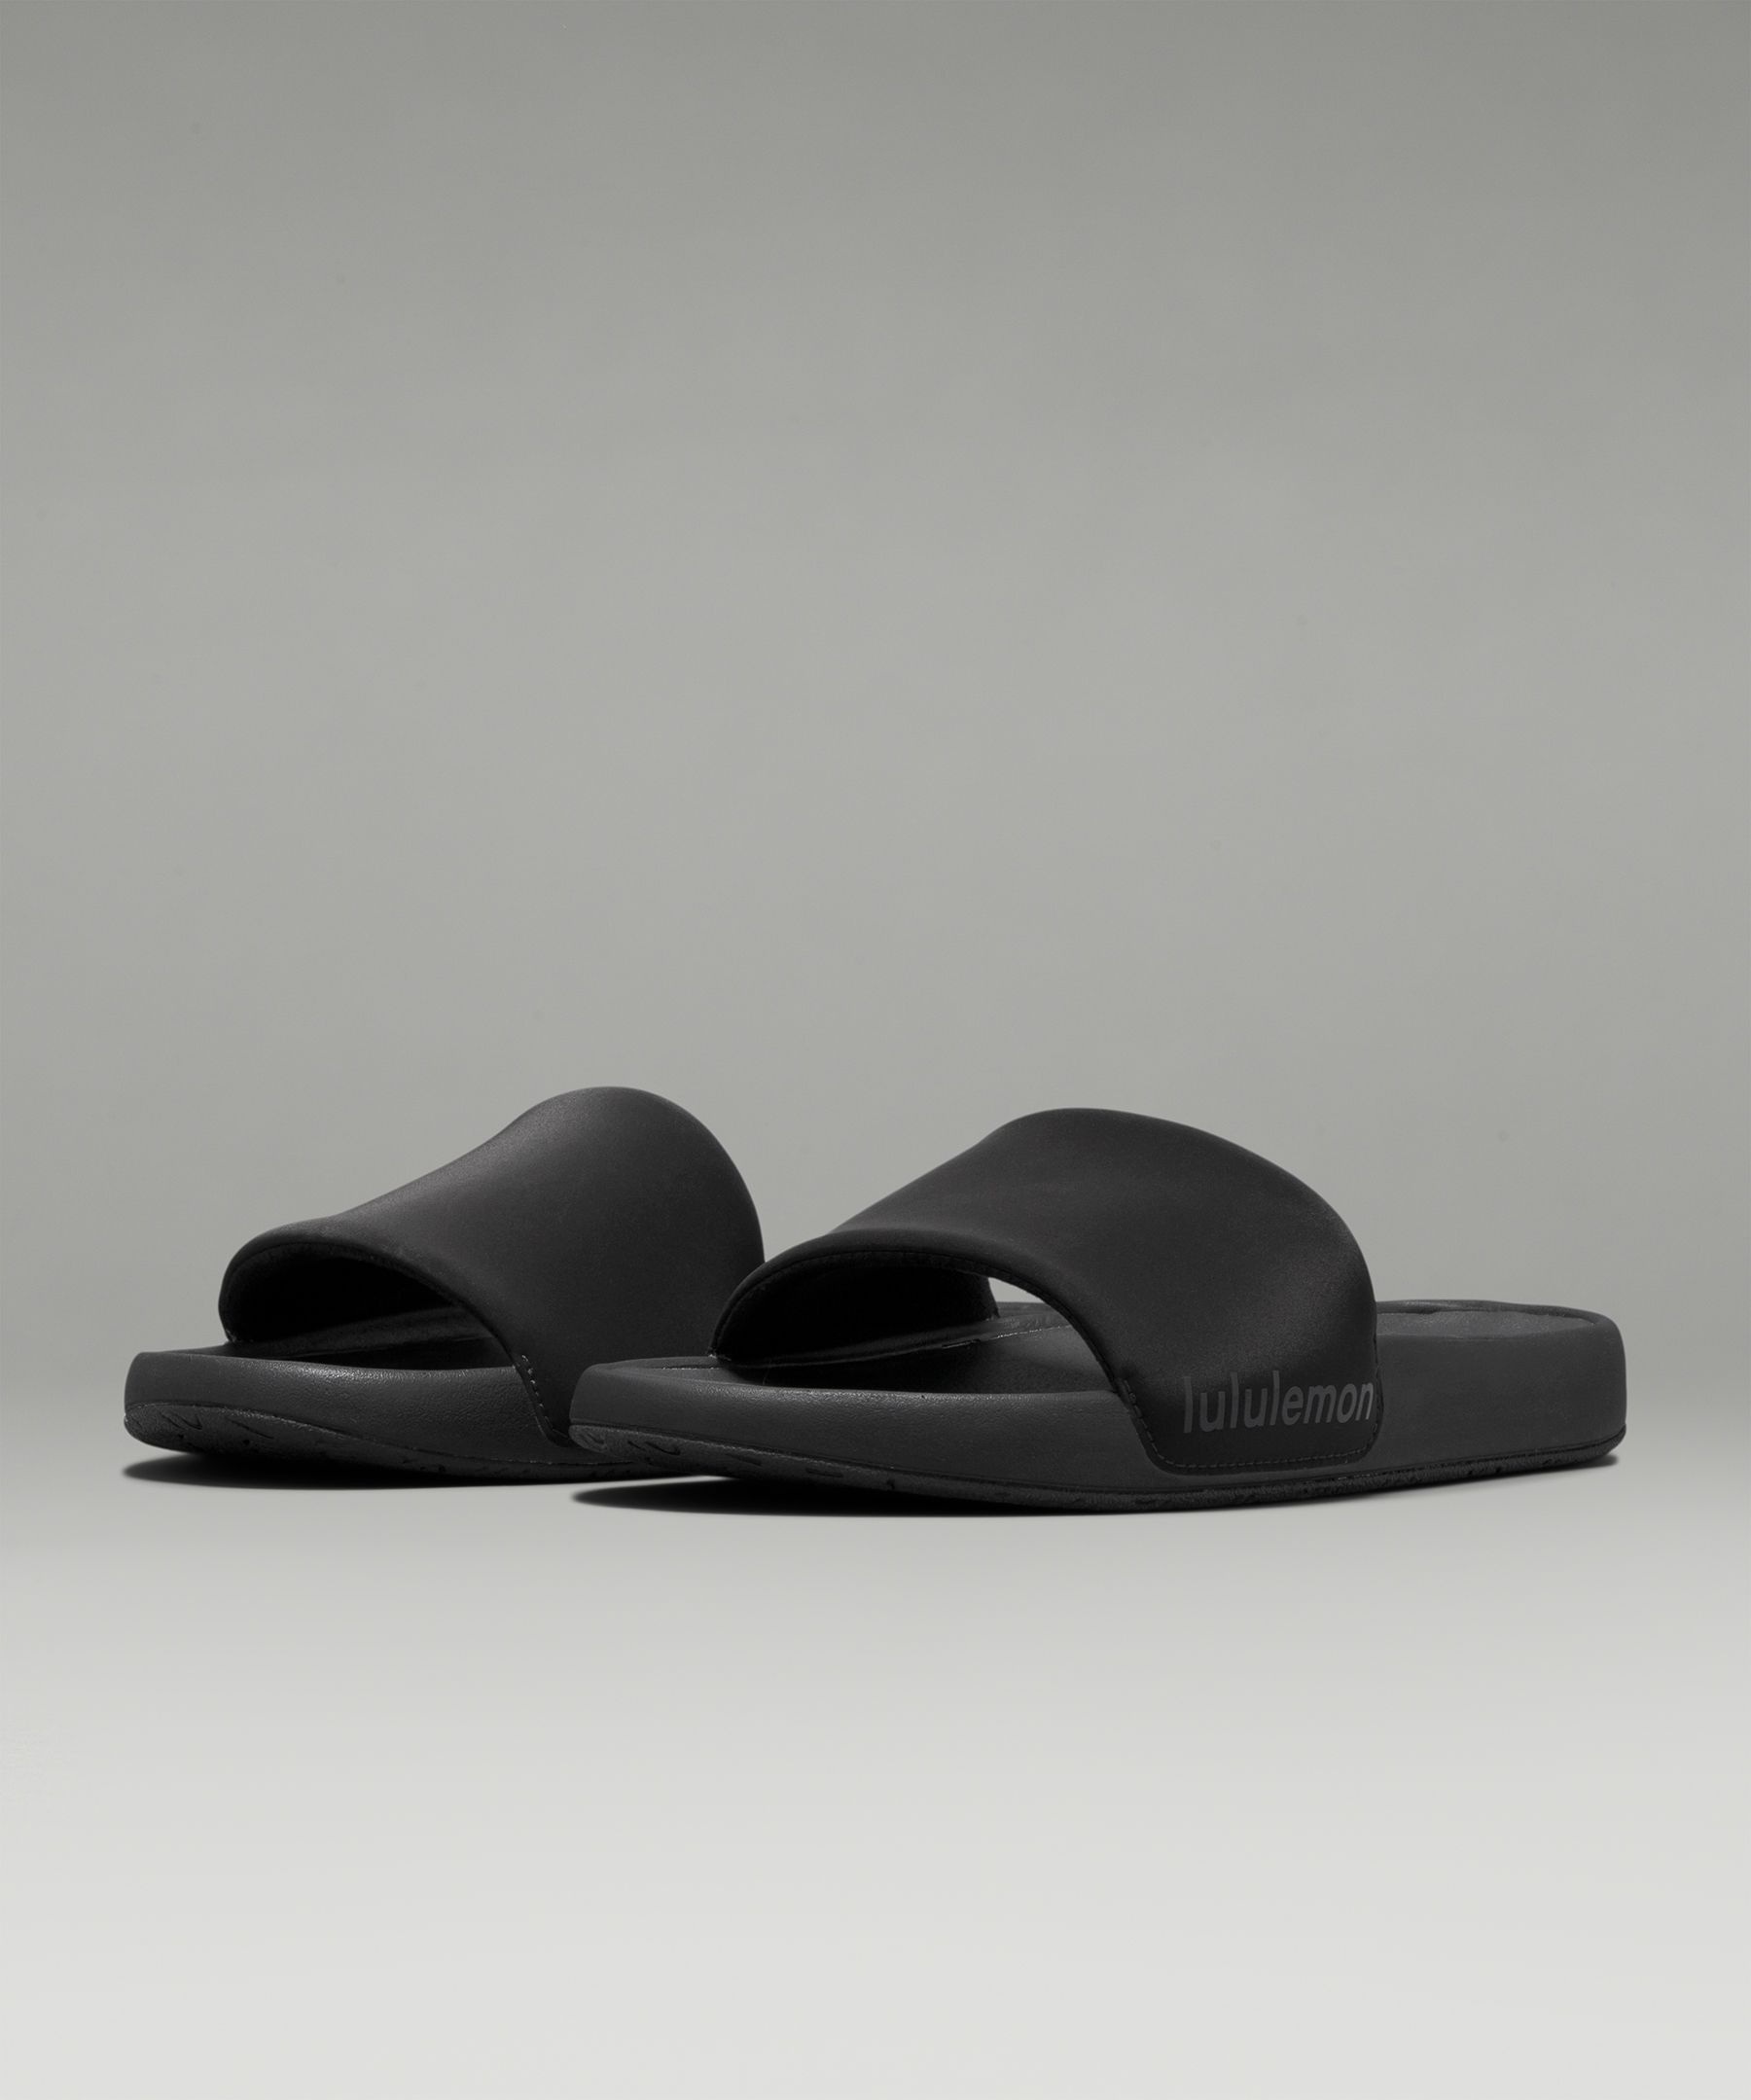 Shop Men's Sandals, Slides, Arch Support & more